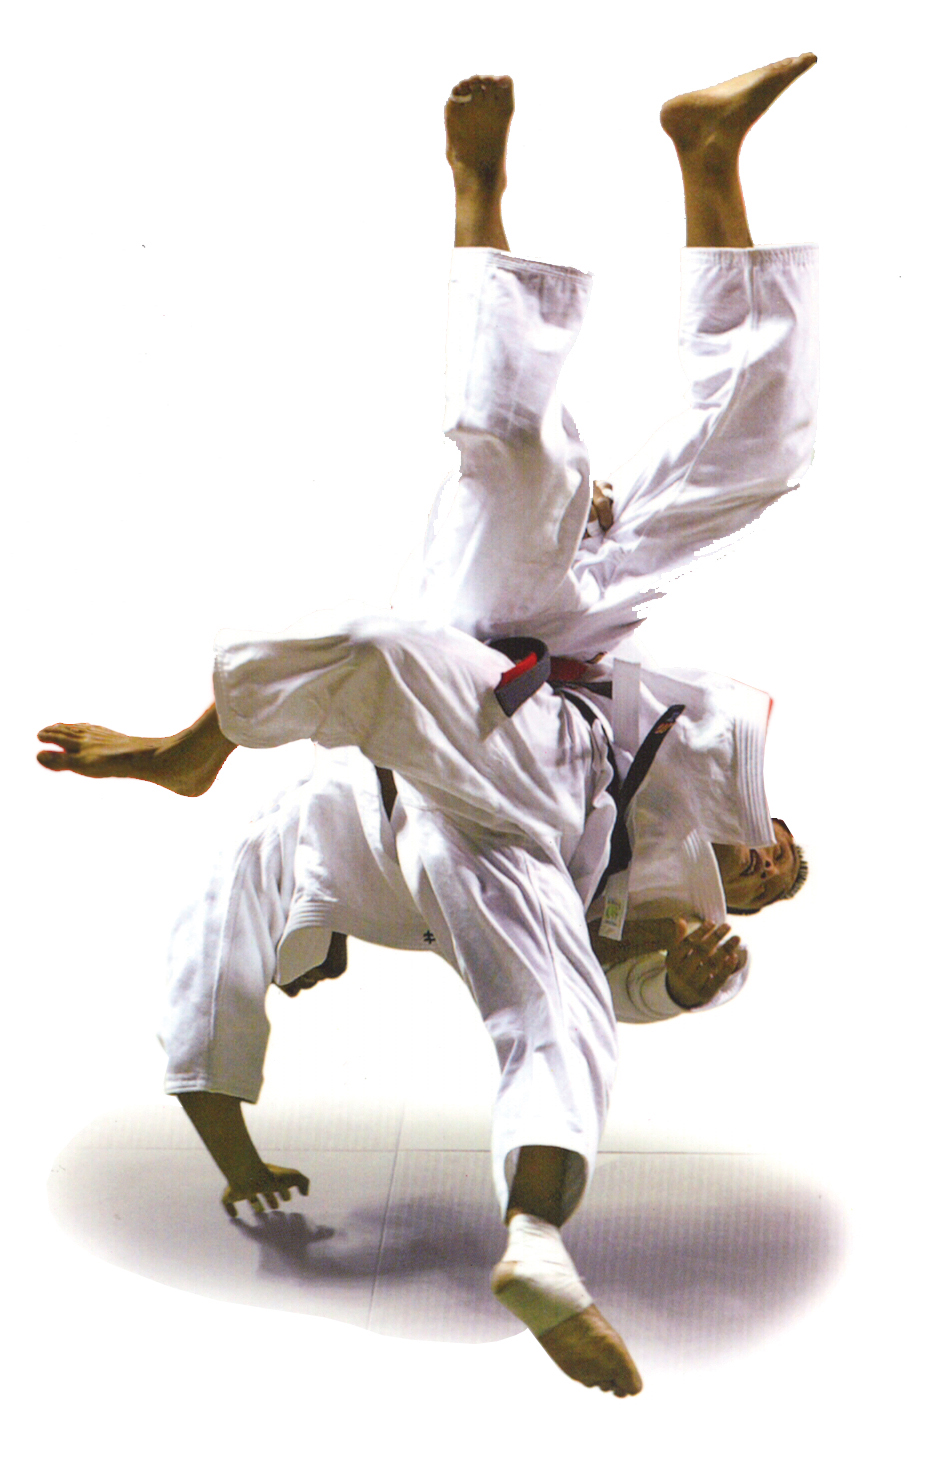 Judo-throw - فنون جودو کیو 2 - HD Wallpaper 